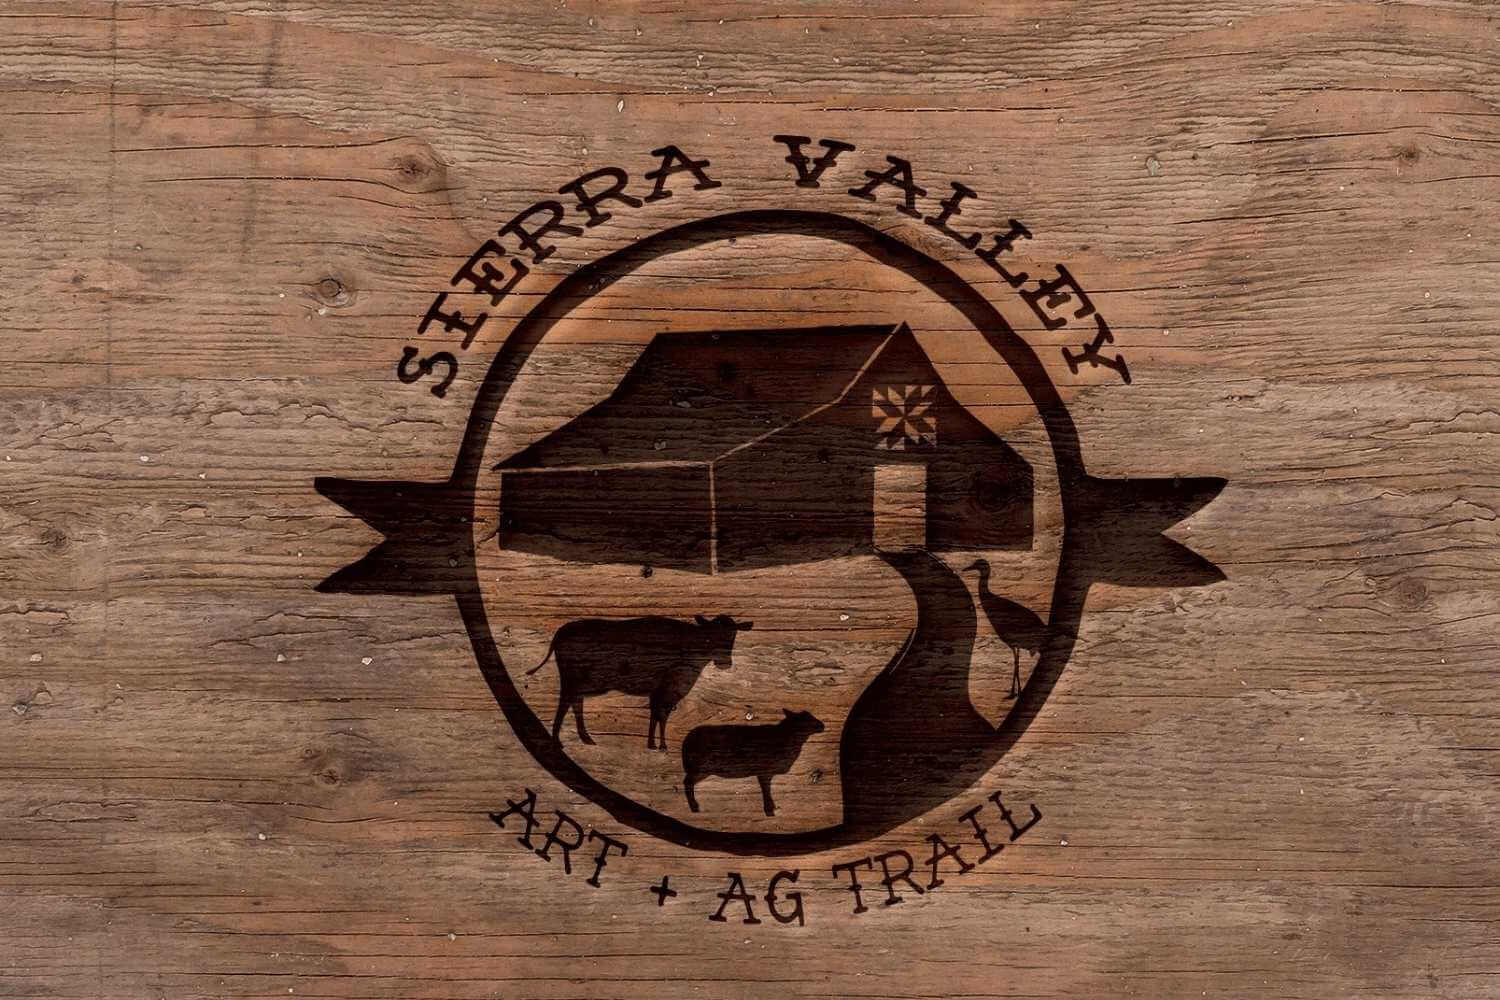 Sierra Valley Art and Ag Trail logo